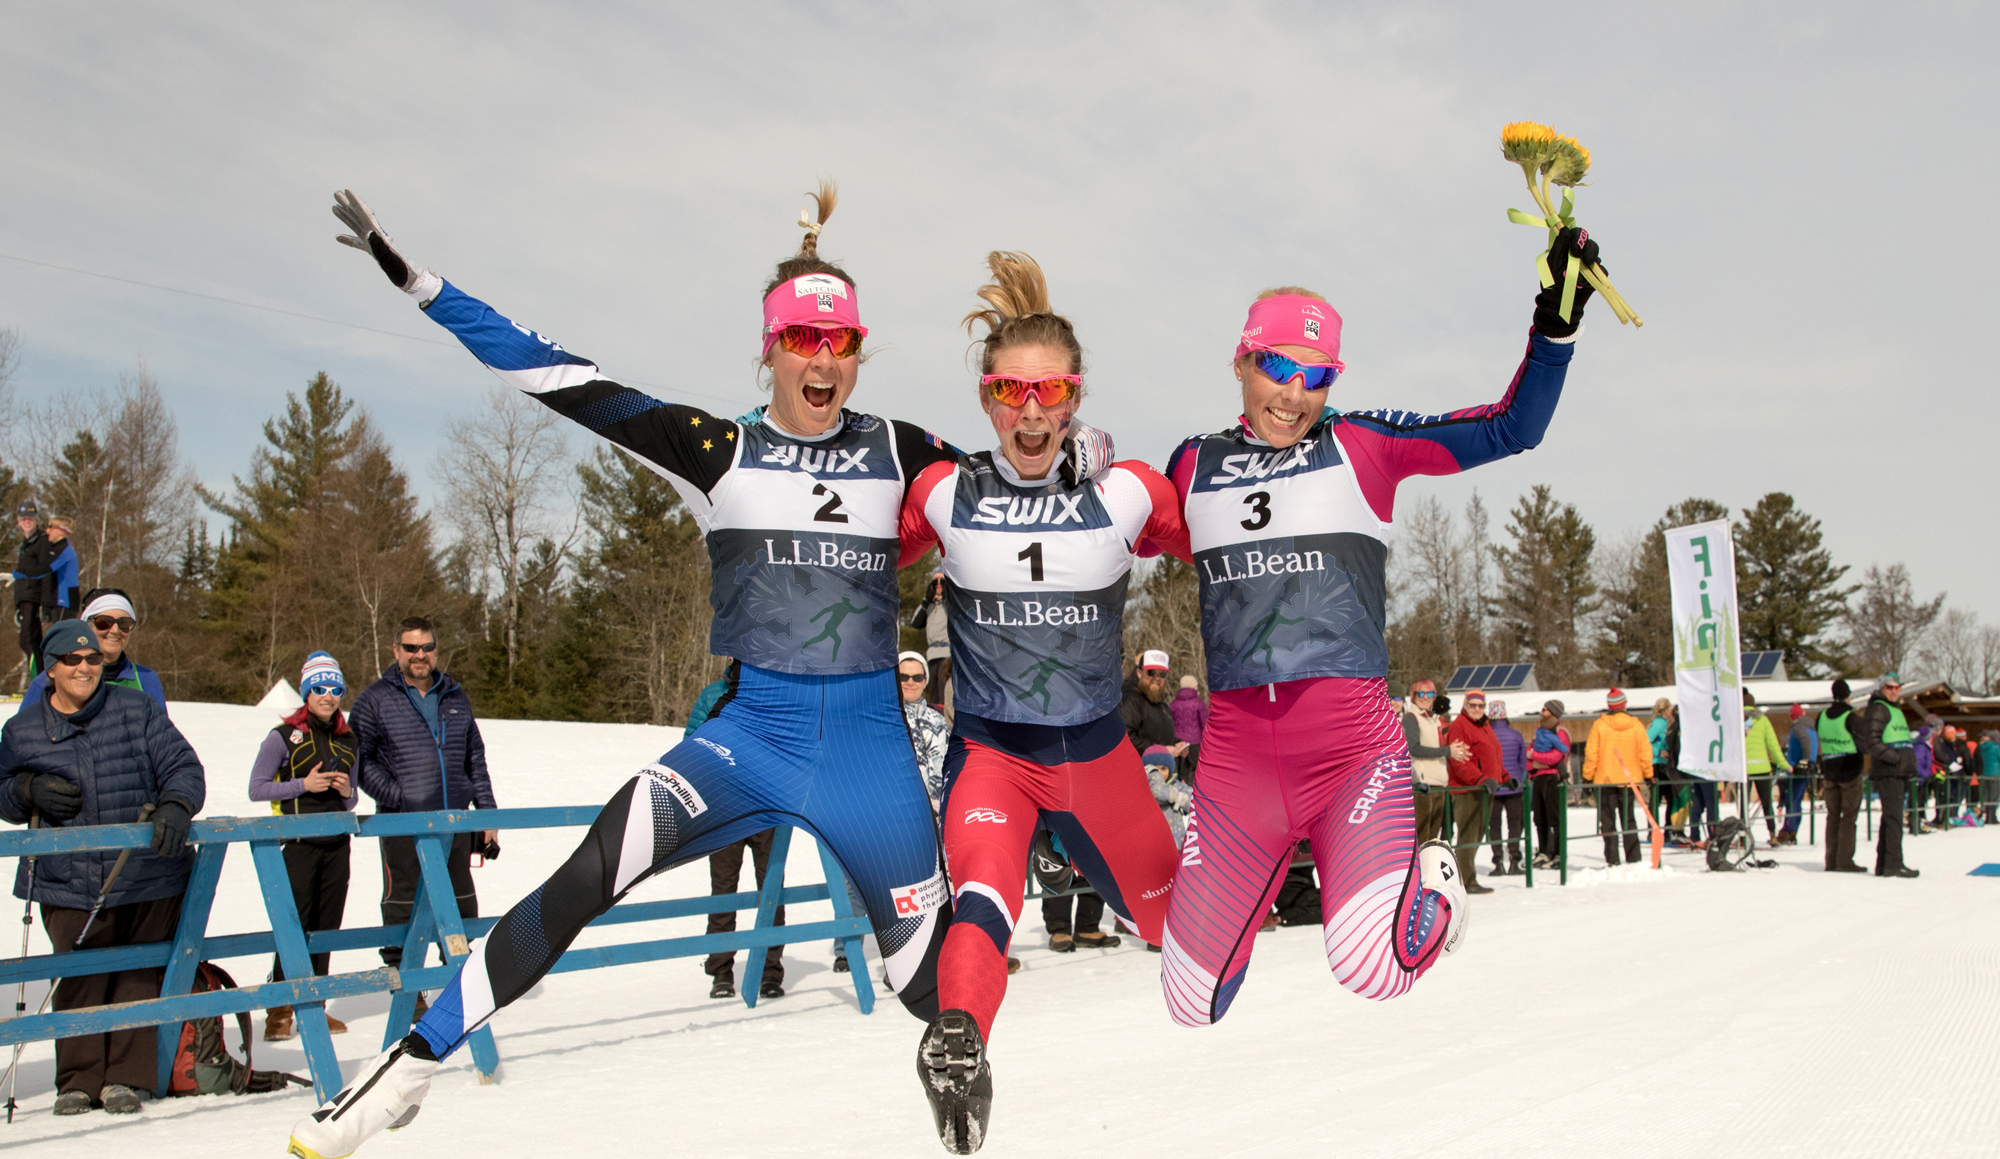 Sadie Bjornsen, Jessie Diggins, and Kikkan Randall celebrate following the women's 30k classic at the L.L.Bean U.S. Cross Country Championship Tuesday. (U.S. Ski & Snowboard - Reese Brown)